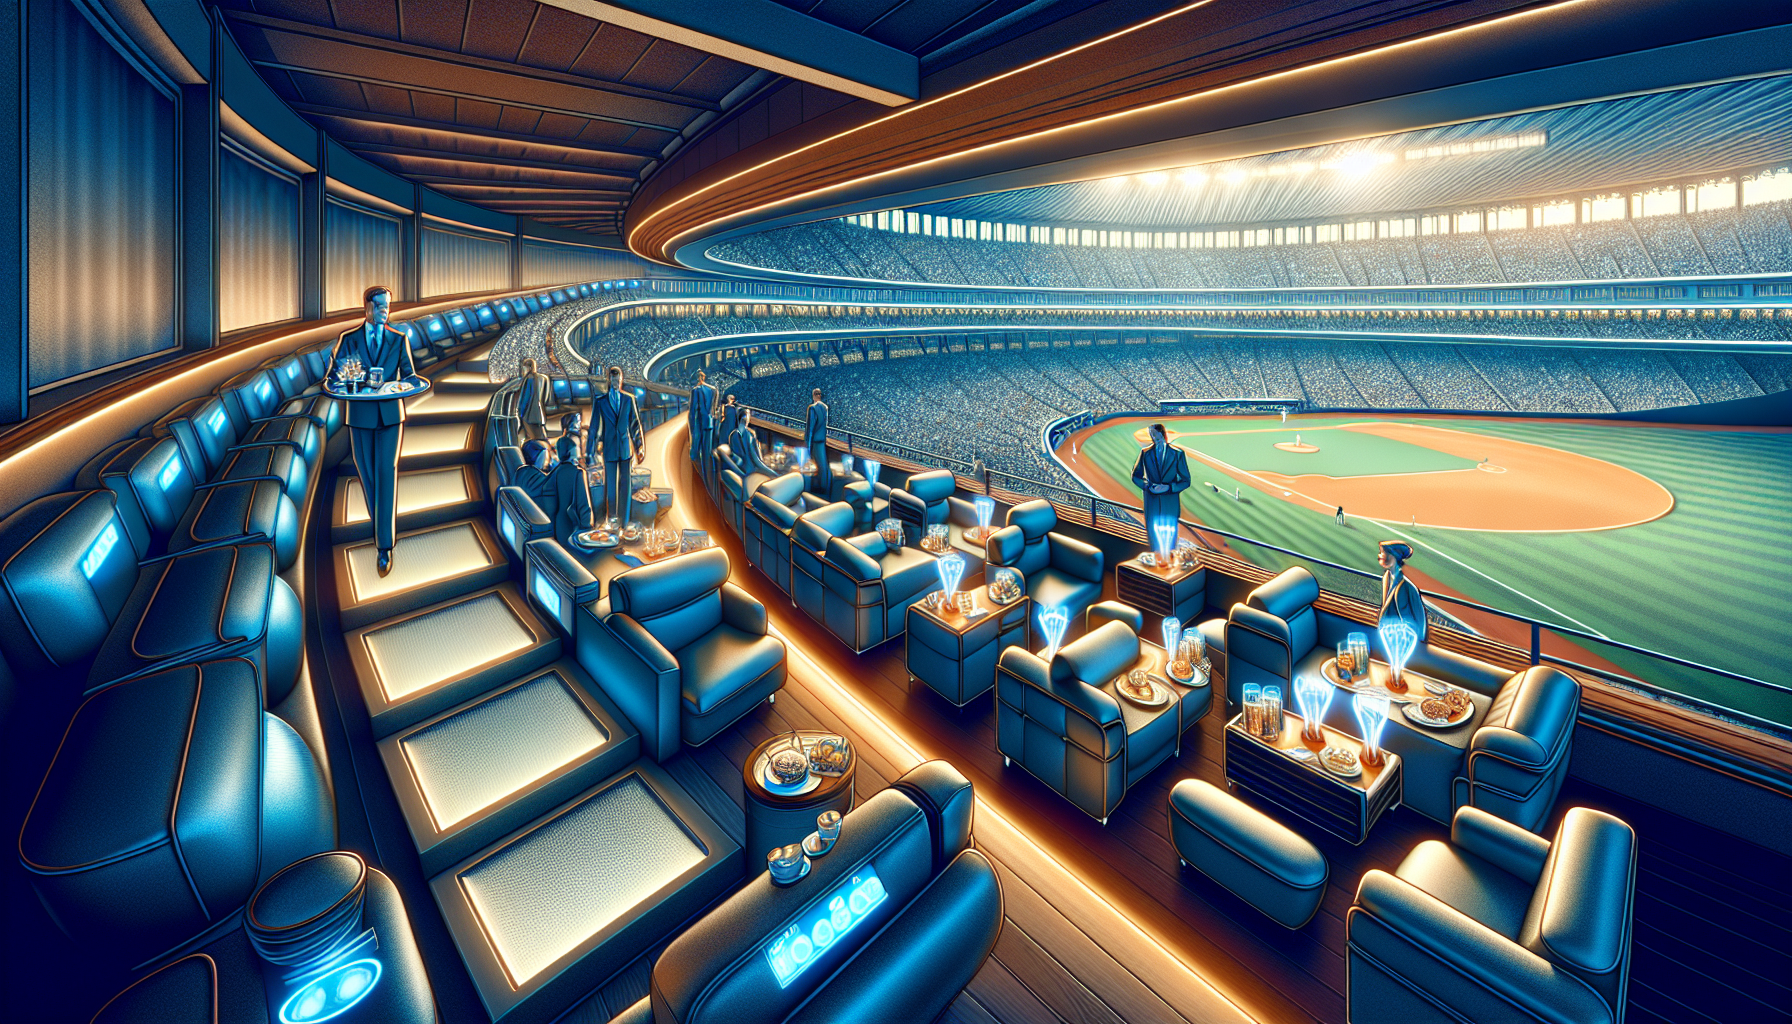 Illustration showcasing the luxurious amenities and comforts of box seats at a baseball stadium